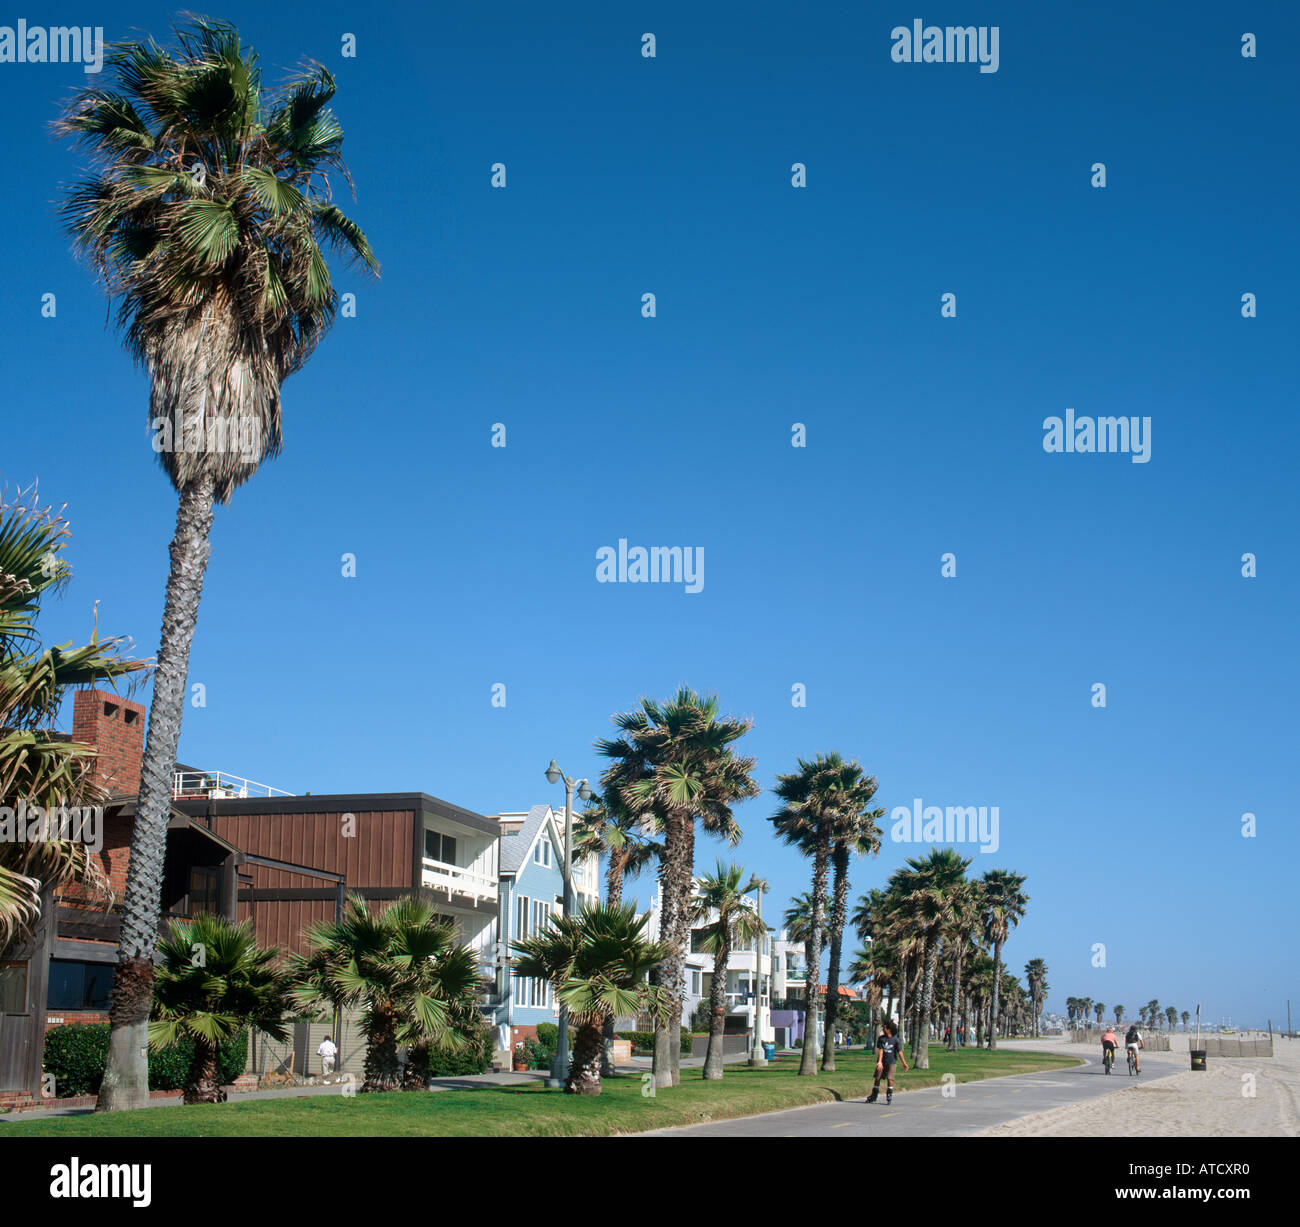 Promenade du front de mer, Venice Beach, Santa Monica, Los Angeles, Californie, USA Banque D'Images